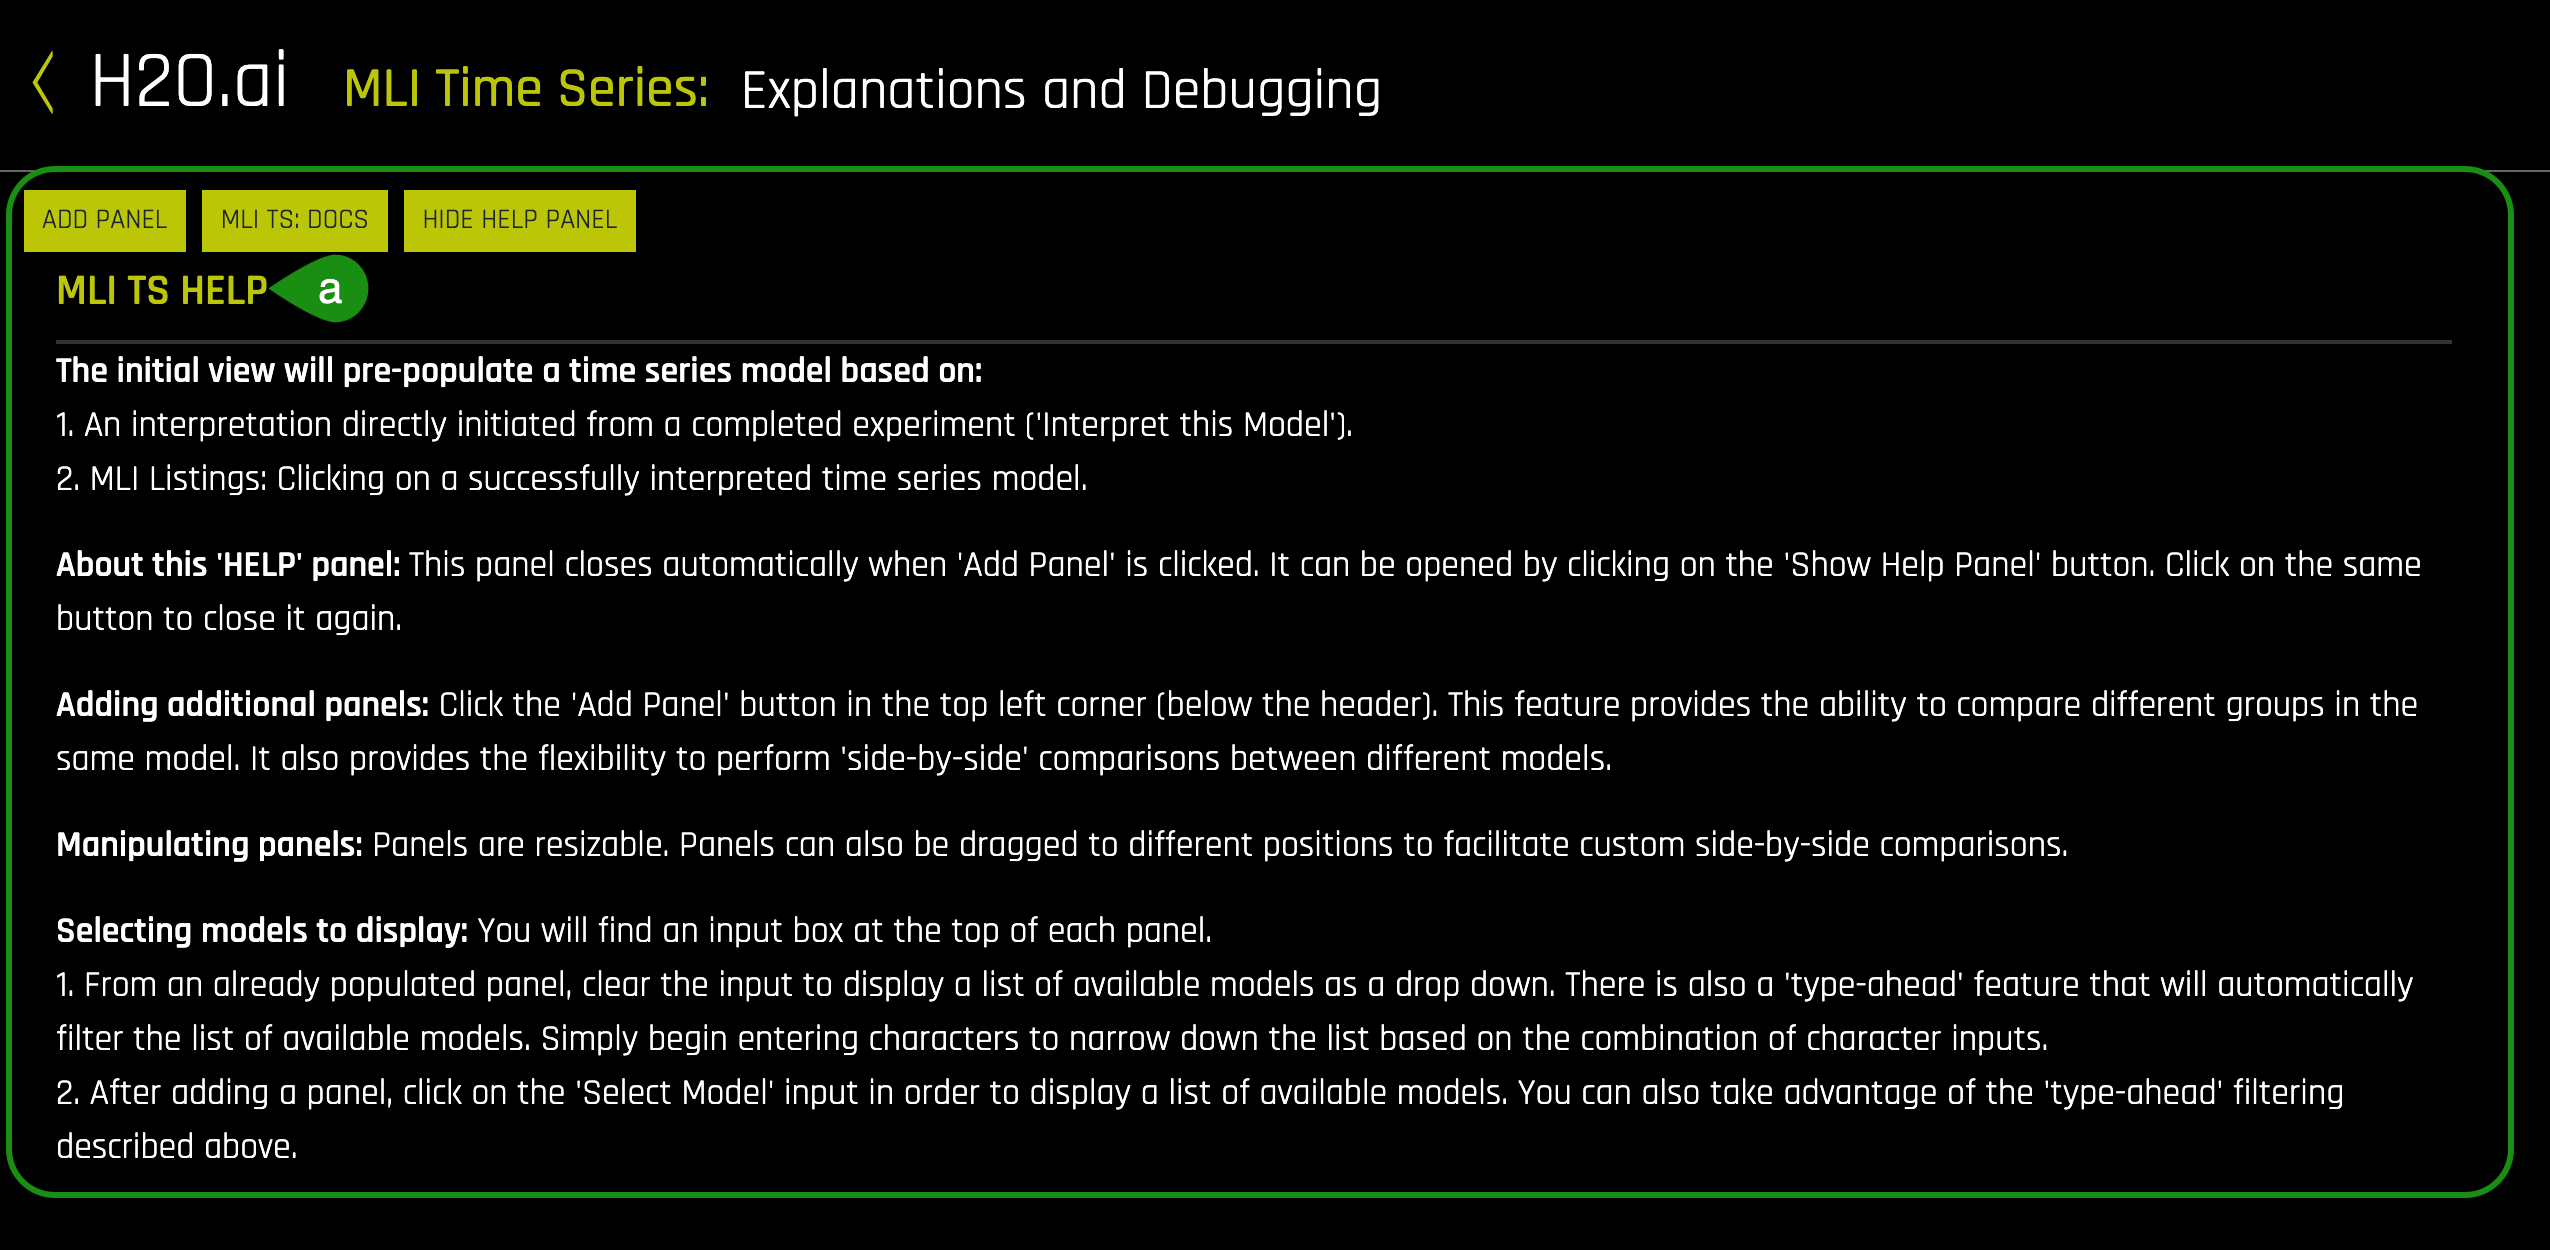 mli-time-series-explanations-and-debugging-1